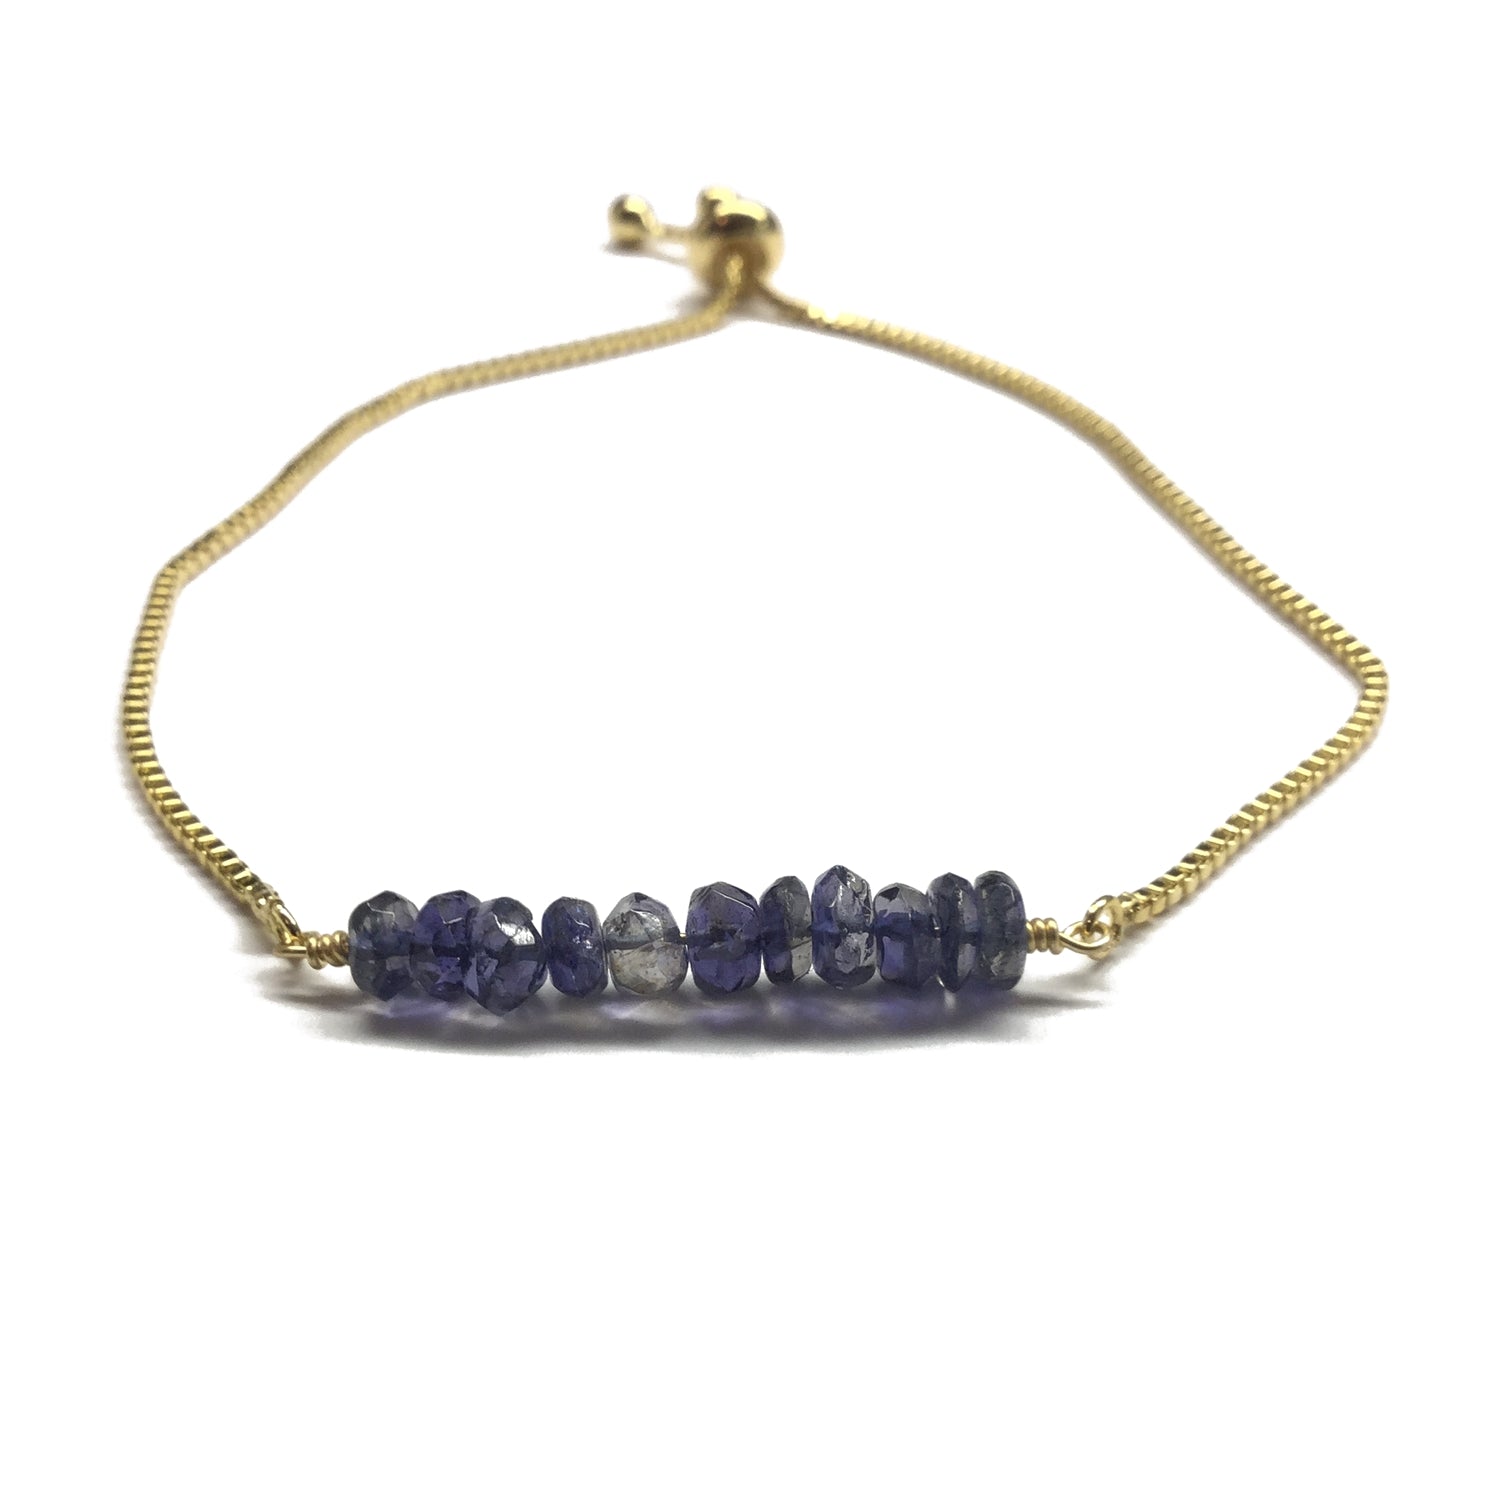 Natural iolite gemstone bar gold stainless steel box chain adjustable bracelet